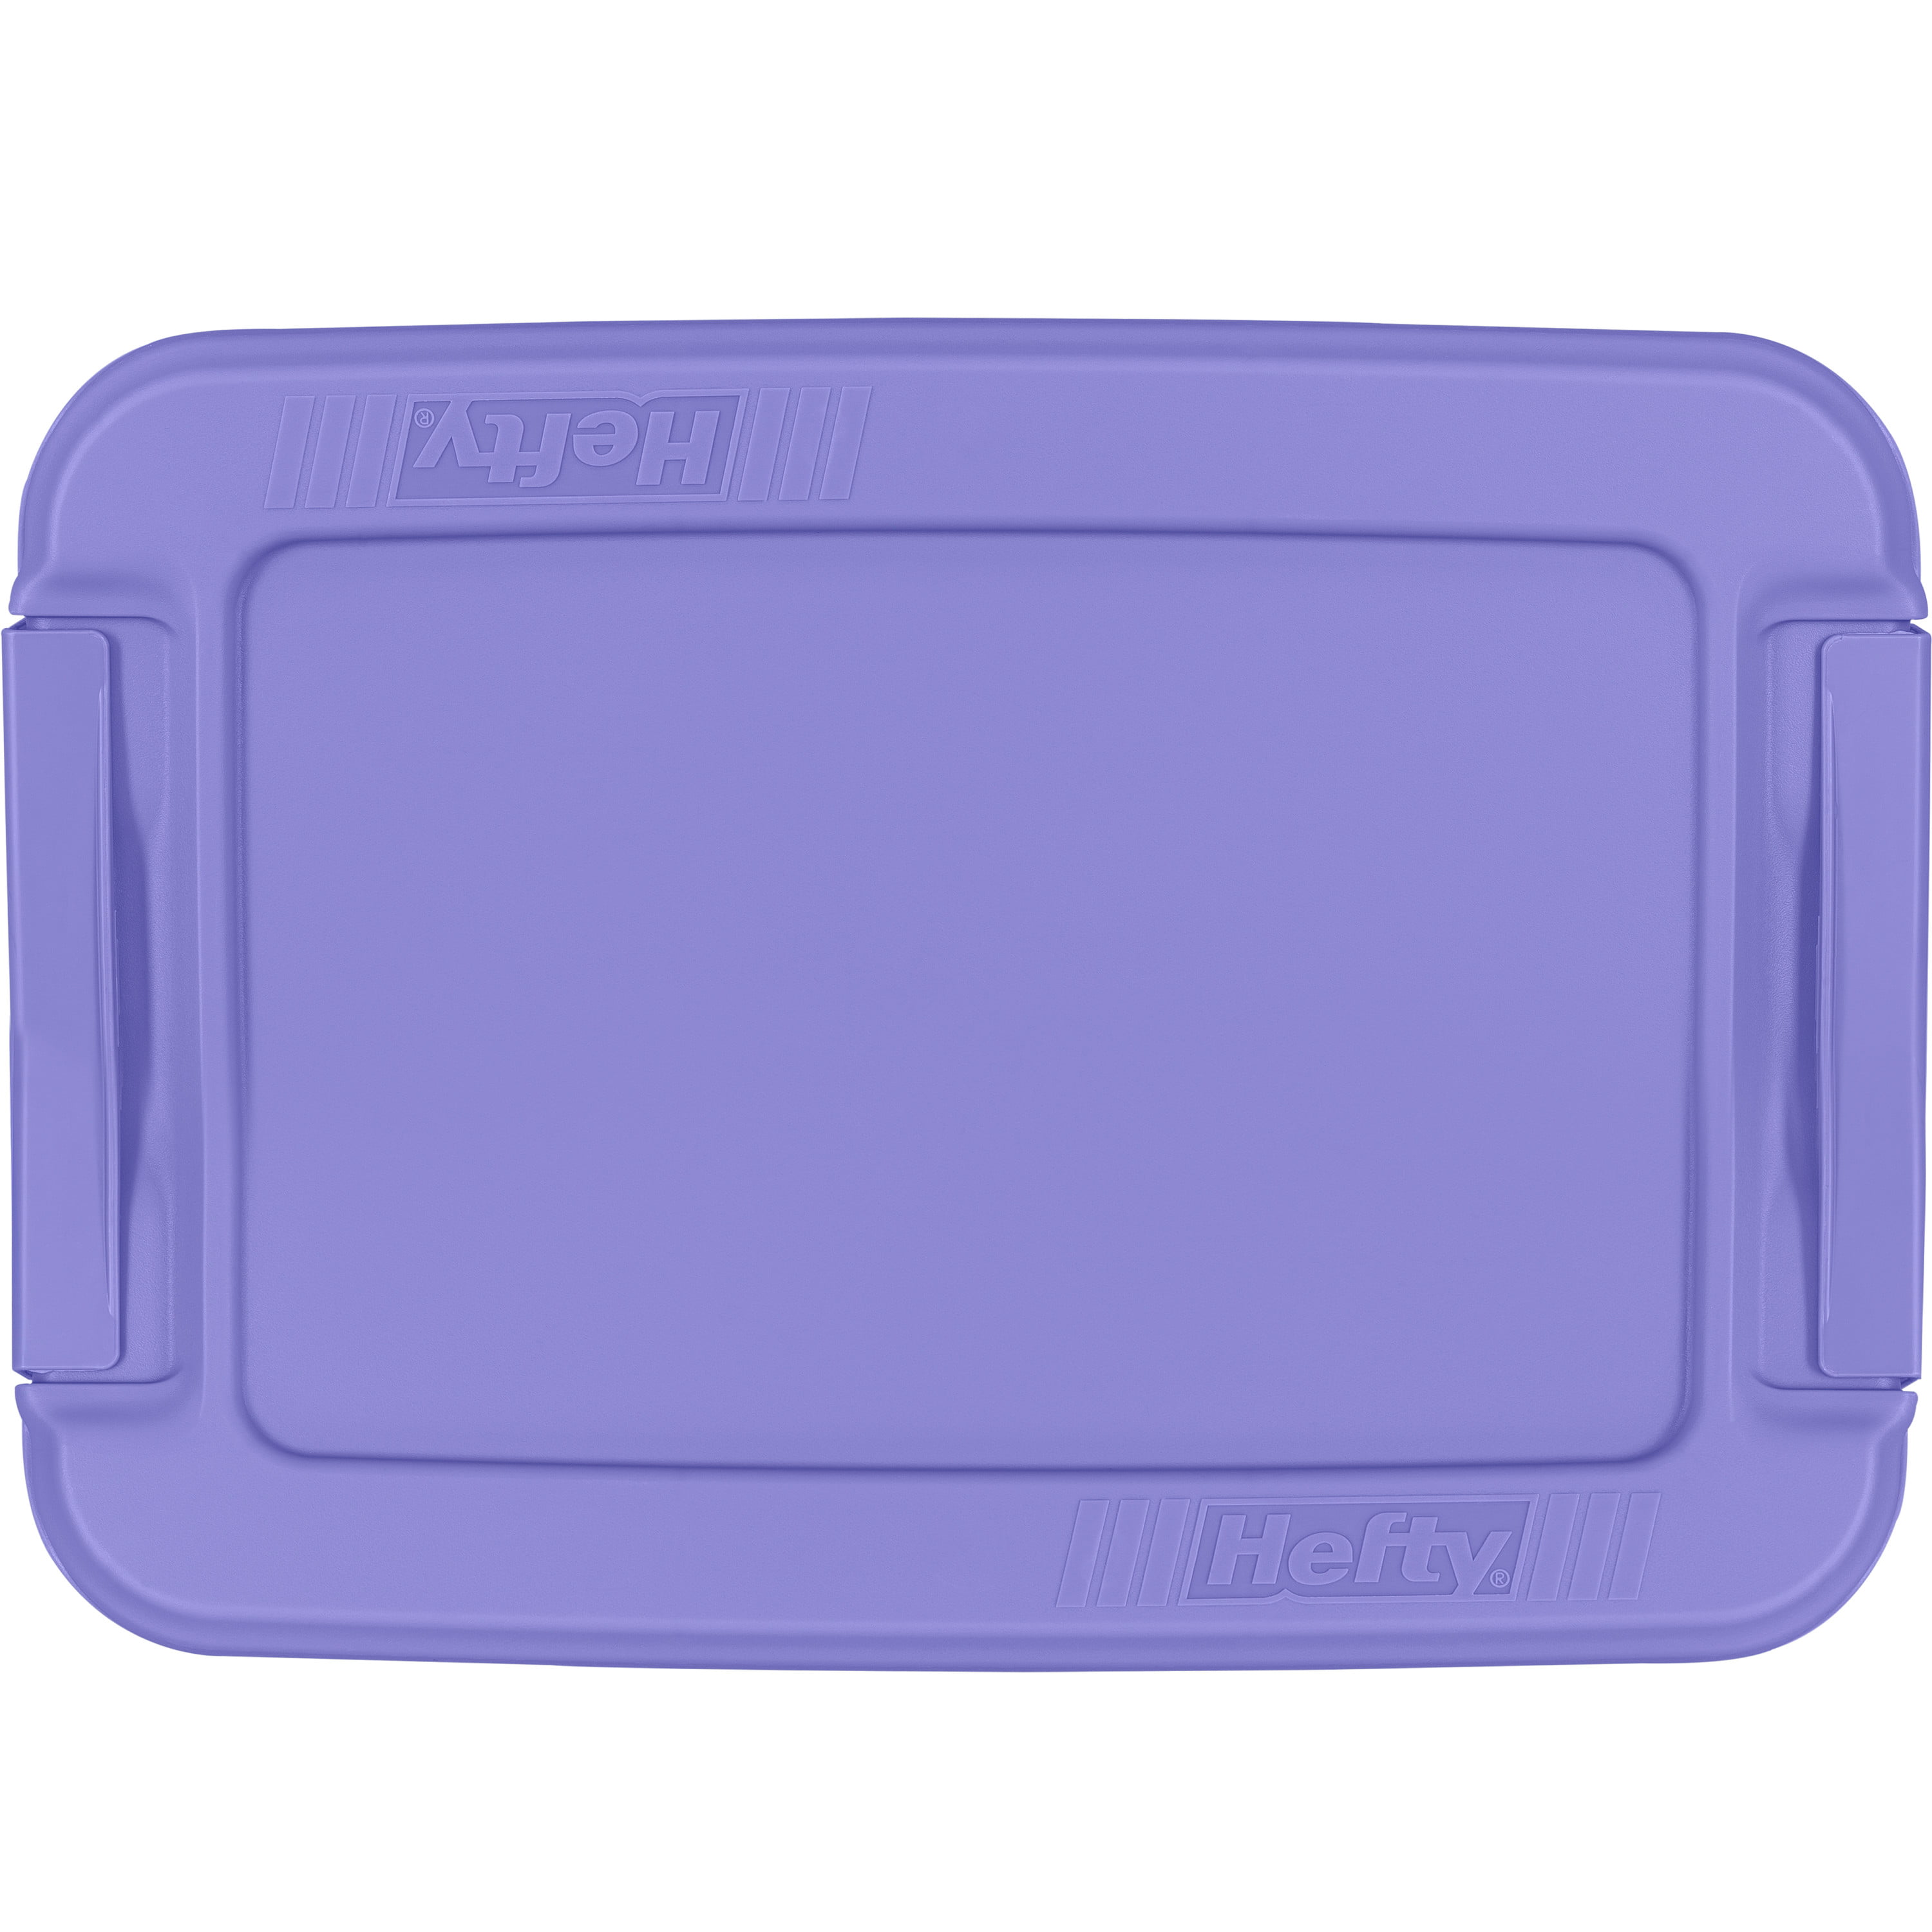 Hefty 6.5-qt Clear Storage Bin with Blue Lid, 8 Pack 